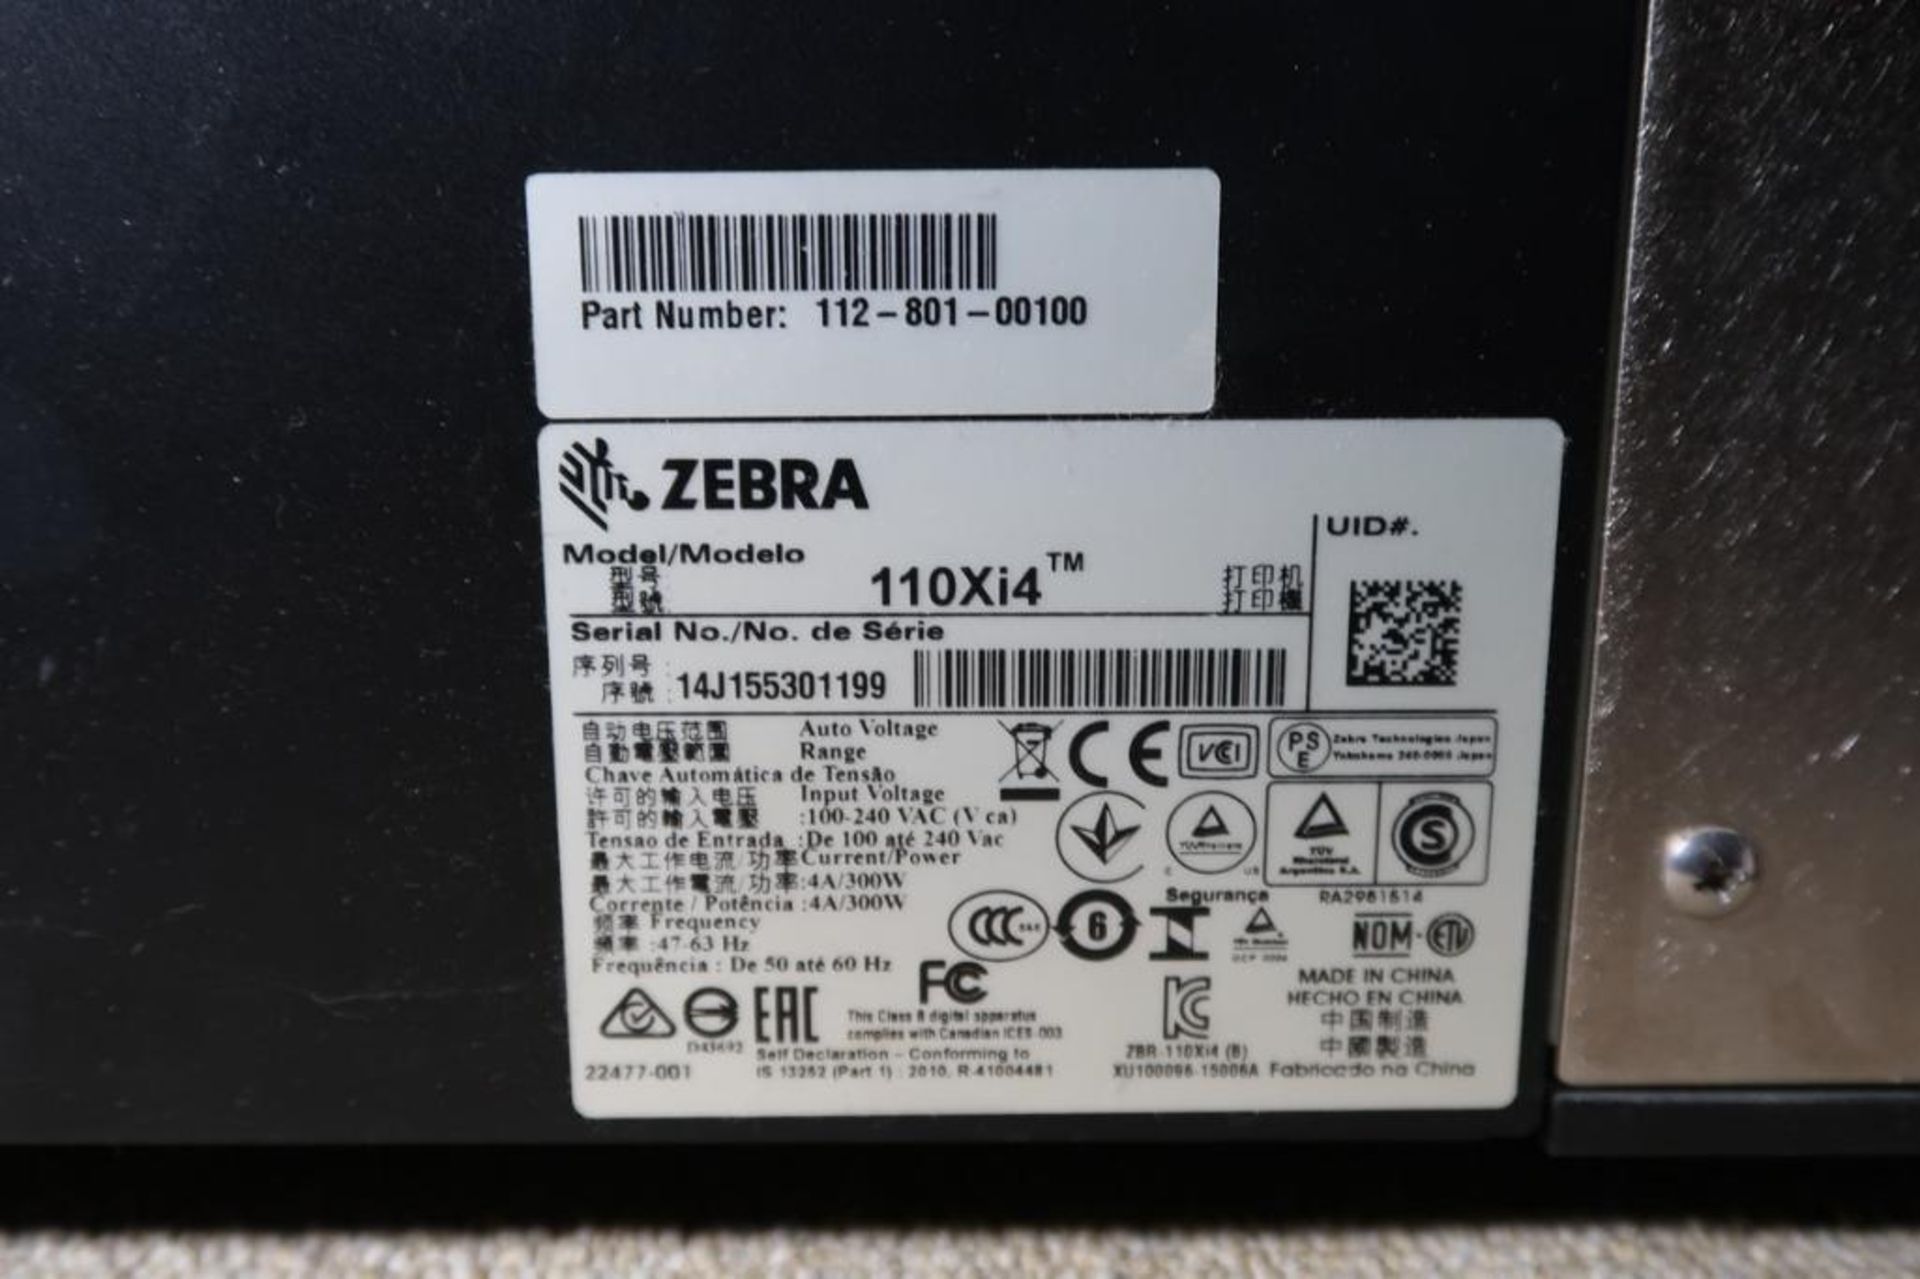 Zebra mdl. 110Xi4 Thermal Label Printer - Image 2 of 2